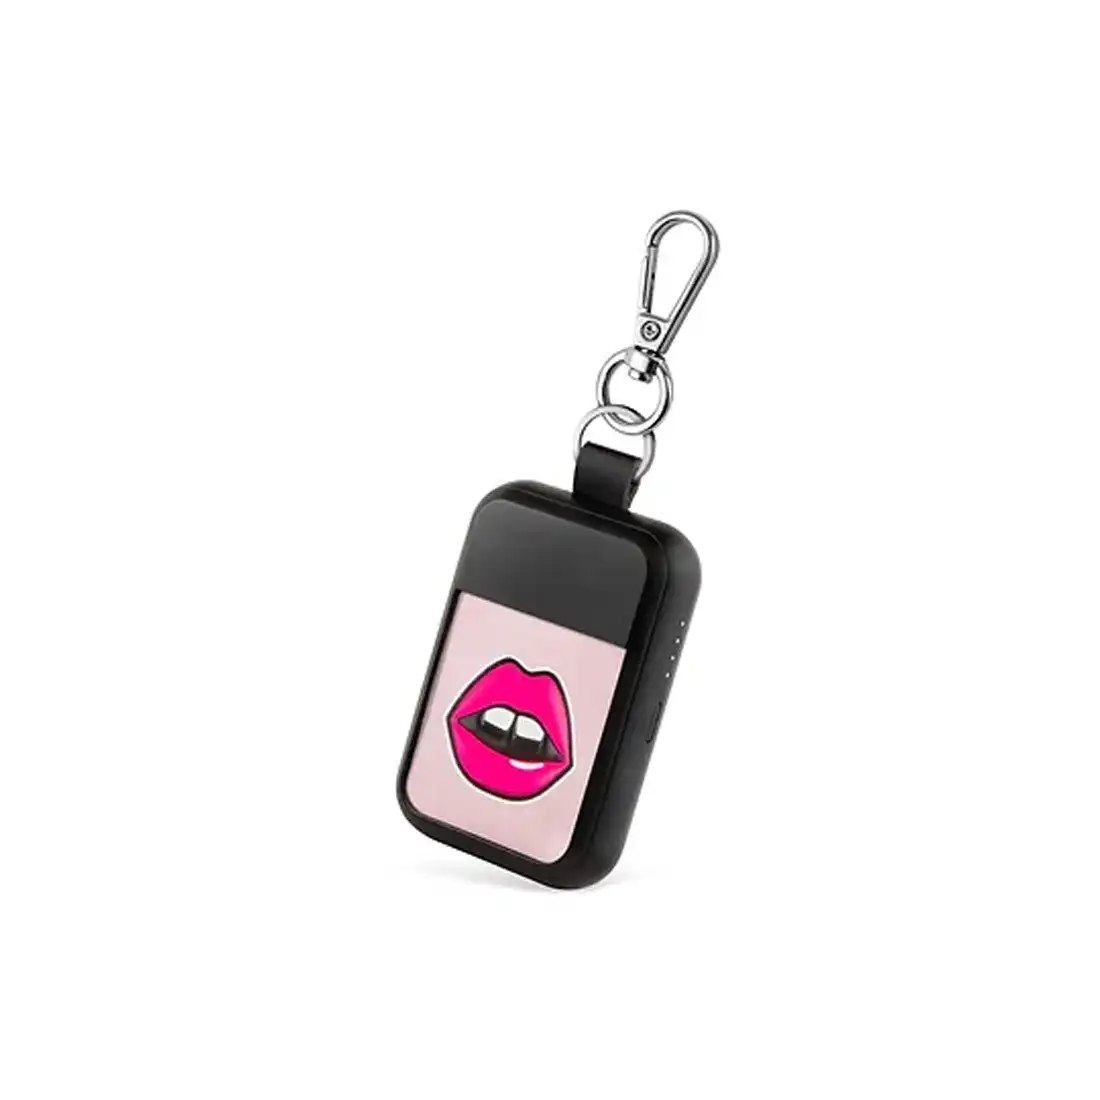 Wipop Keywi Two Wireless Keyring Charger Mini Power Bank - Lips Pink